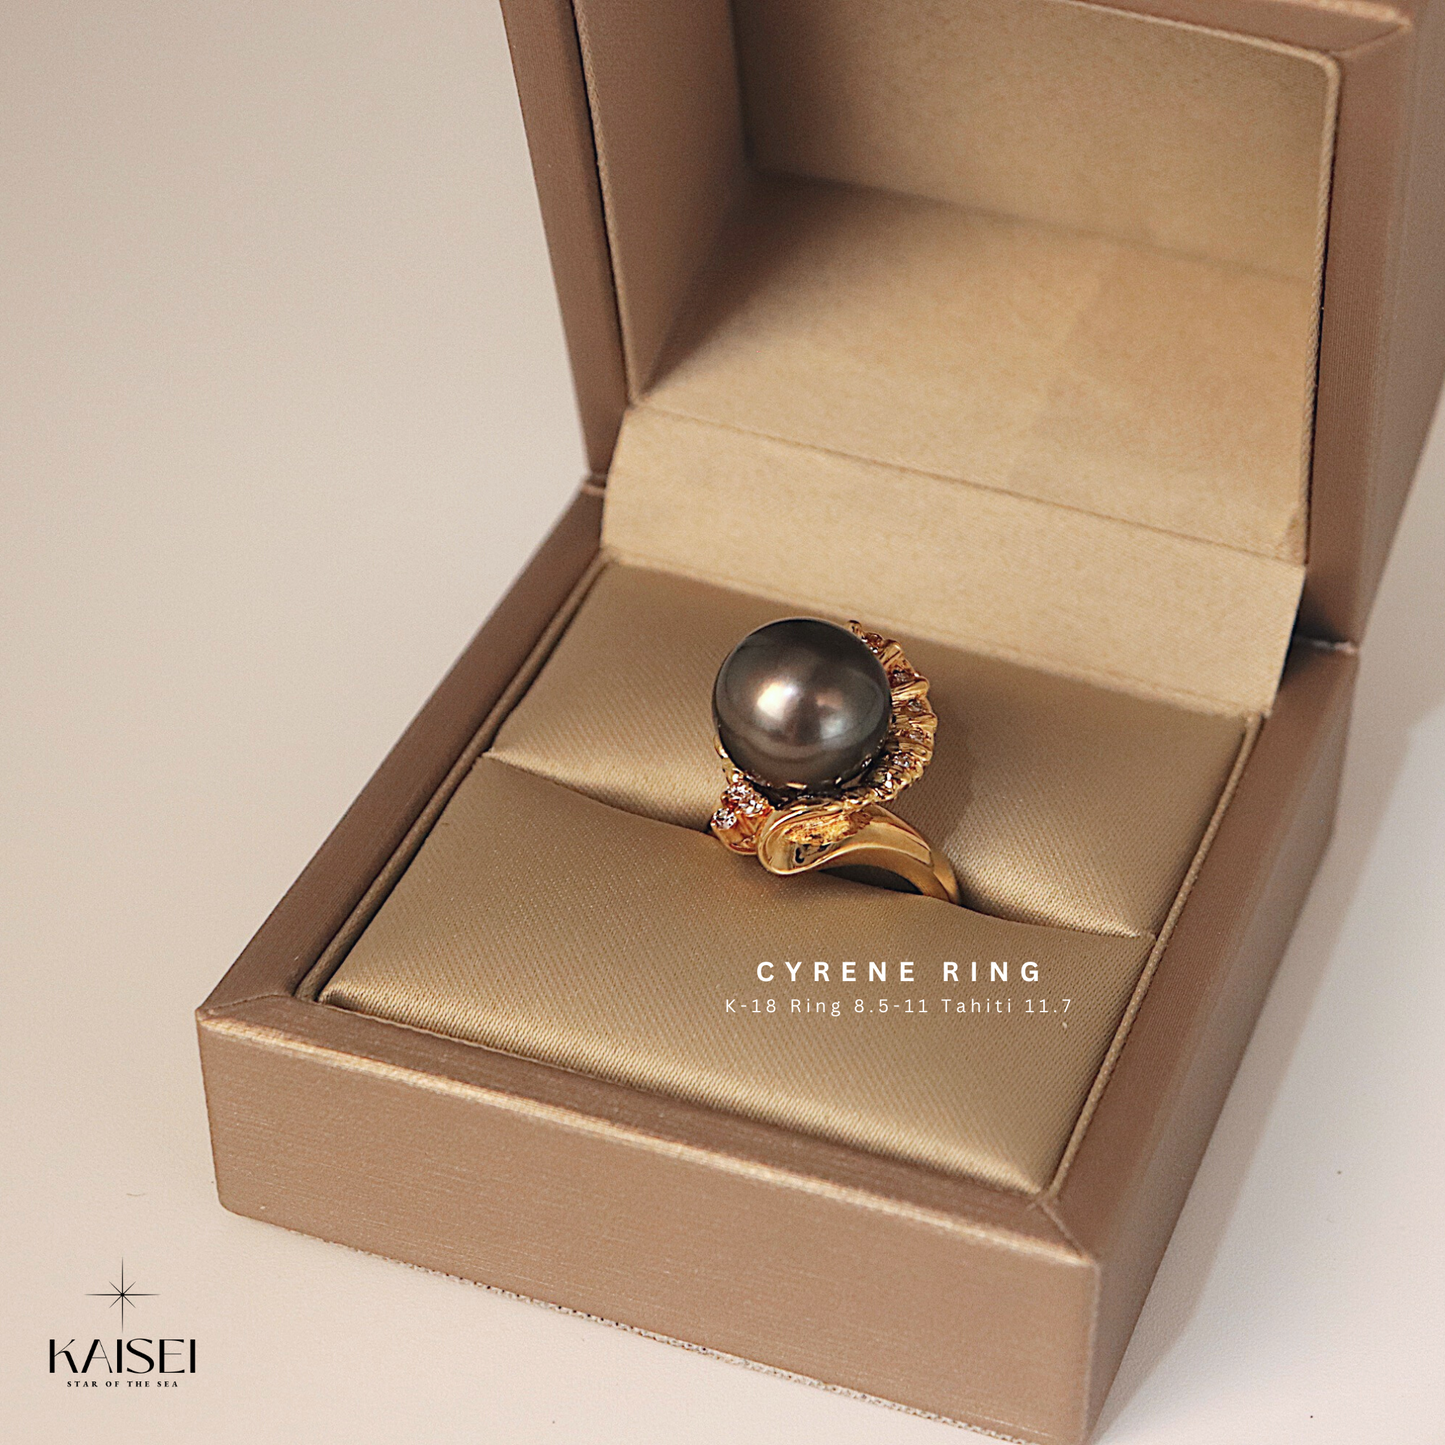 Kaisei Pearl - Cyrene Ring K18 Gold Tahiti Pearl Ring Jewelry Luxurious